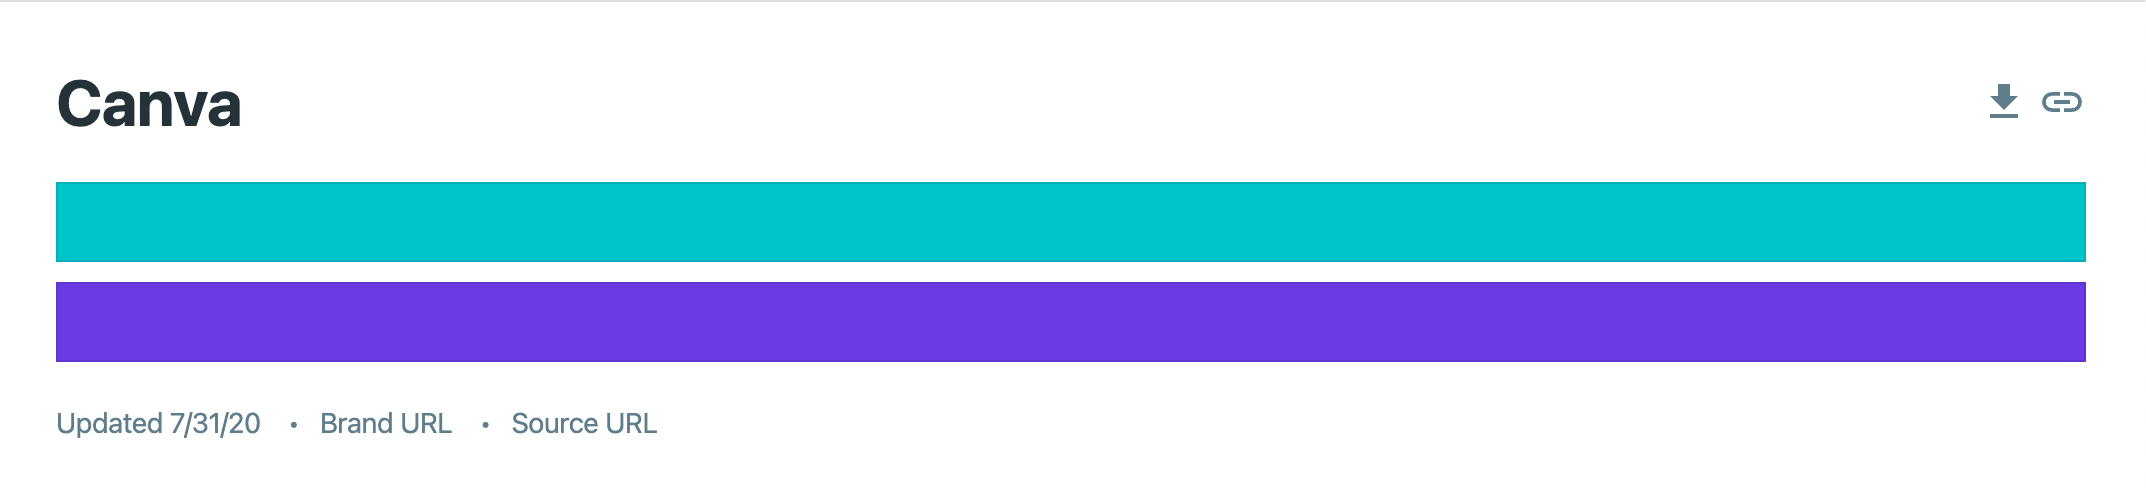 Canva's brand colors (aqua and purple)